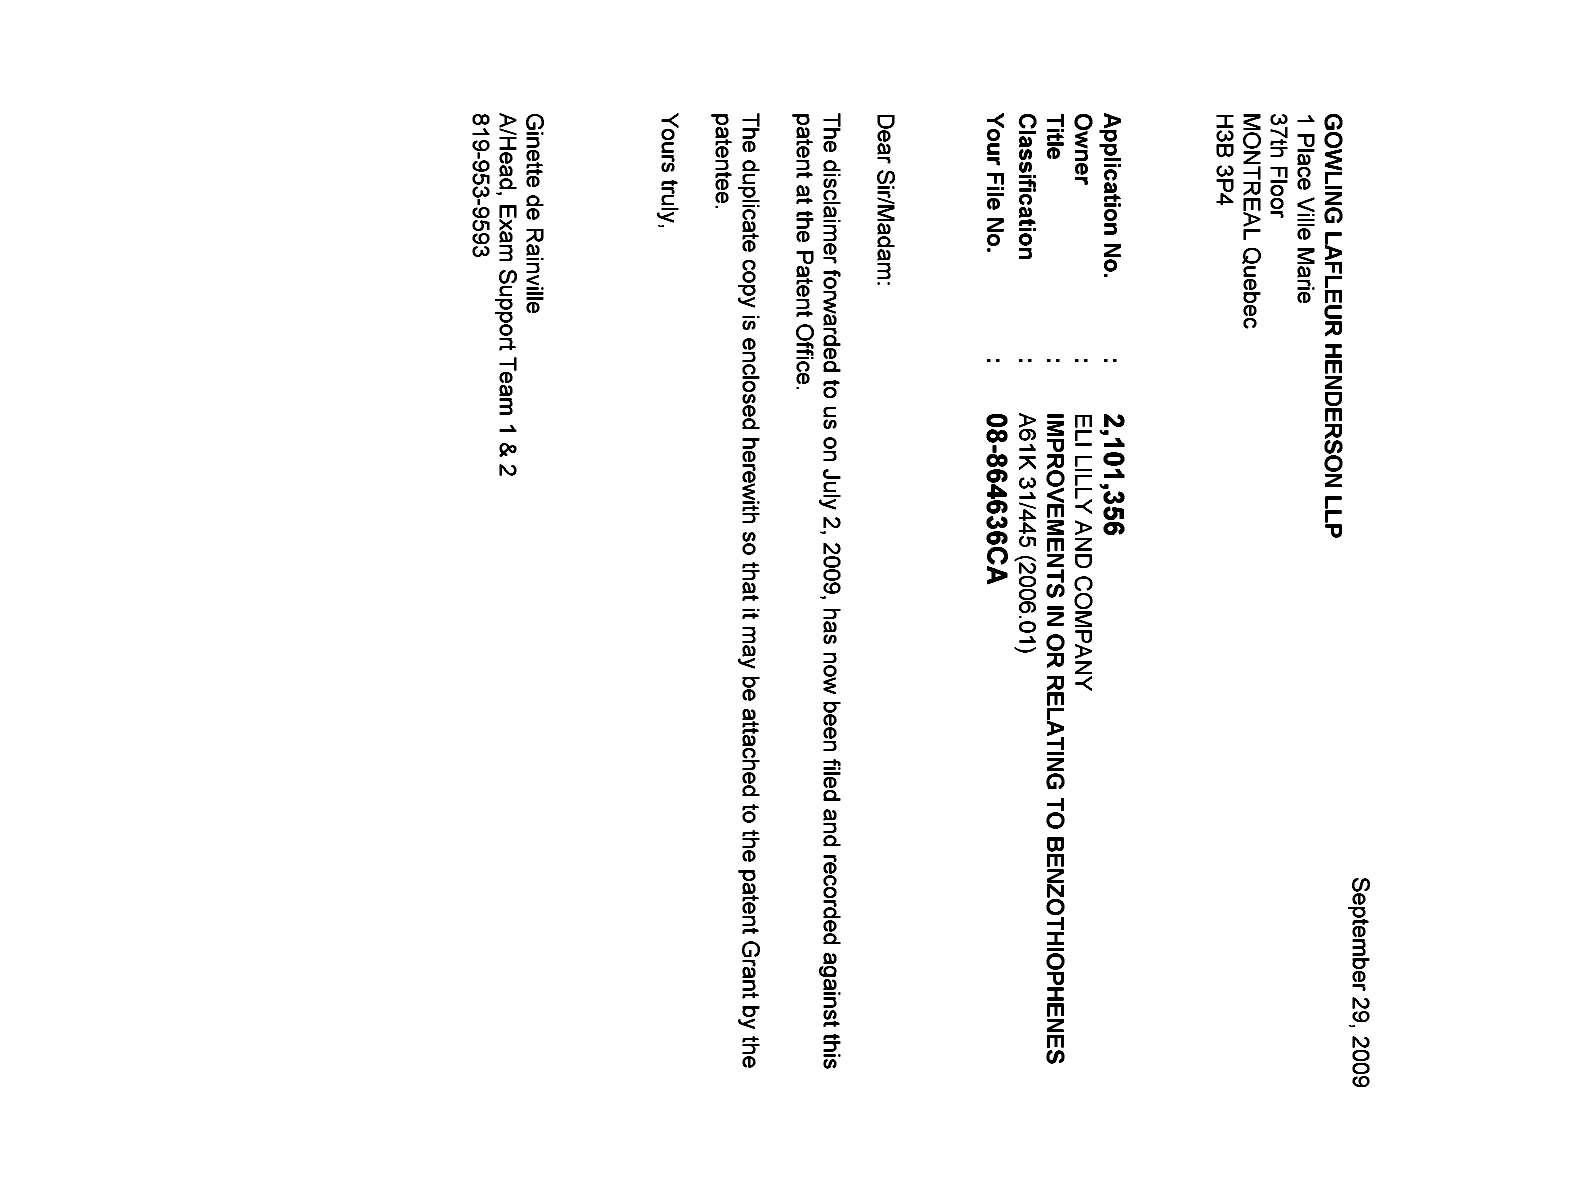 Canadian Patent Document 2101356. Correspondence 20081229. Image 1 of 1